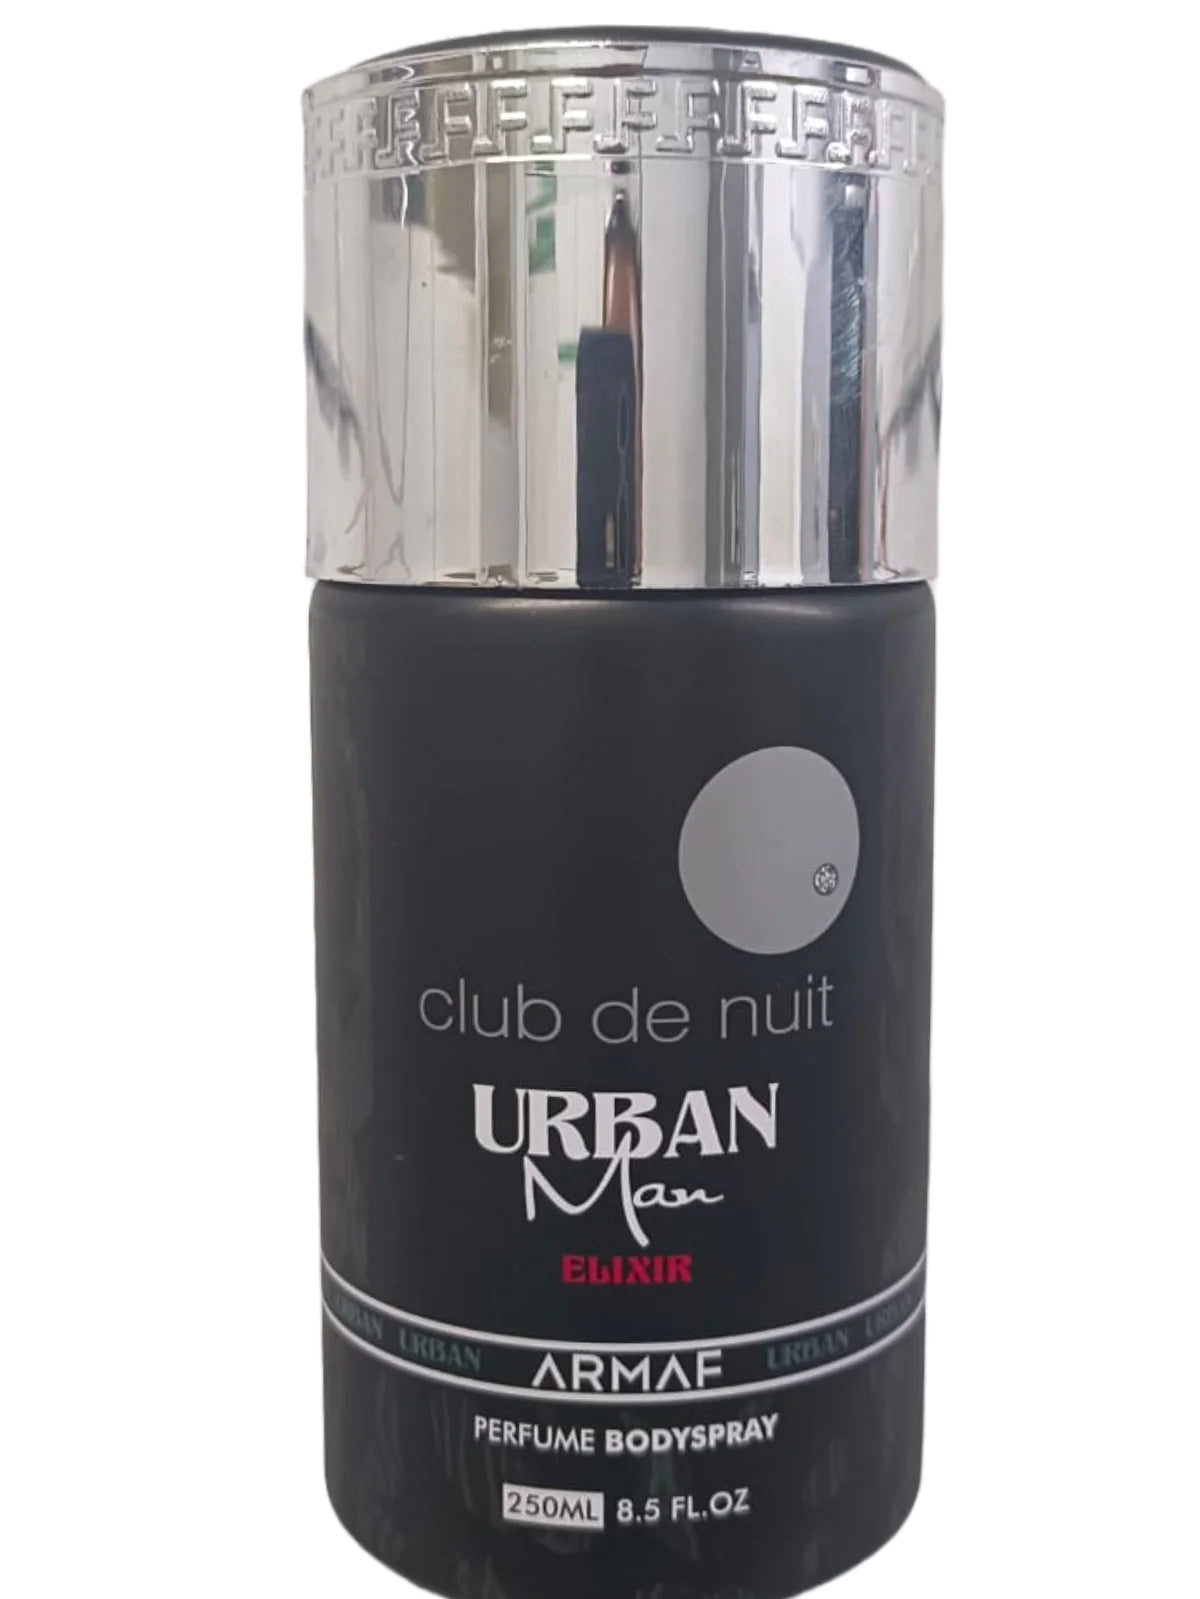 Club De Nuit Urban Elixir by Armaf for Men - Perfume Body Spray - 250ml